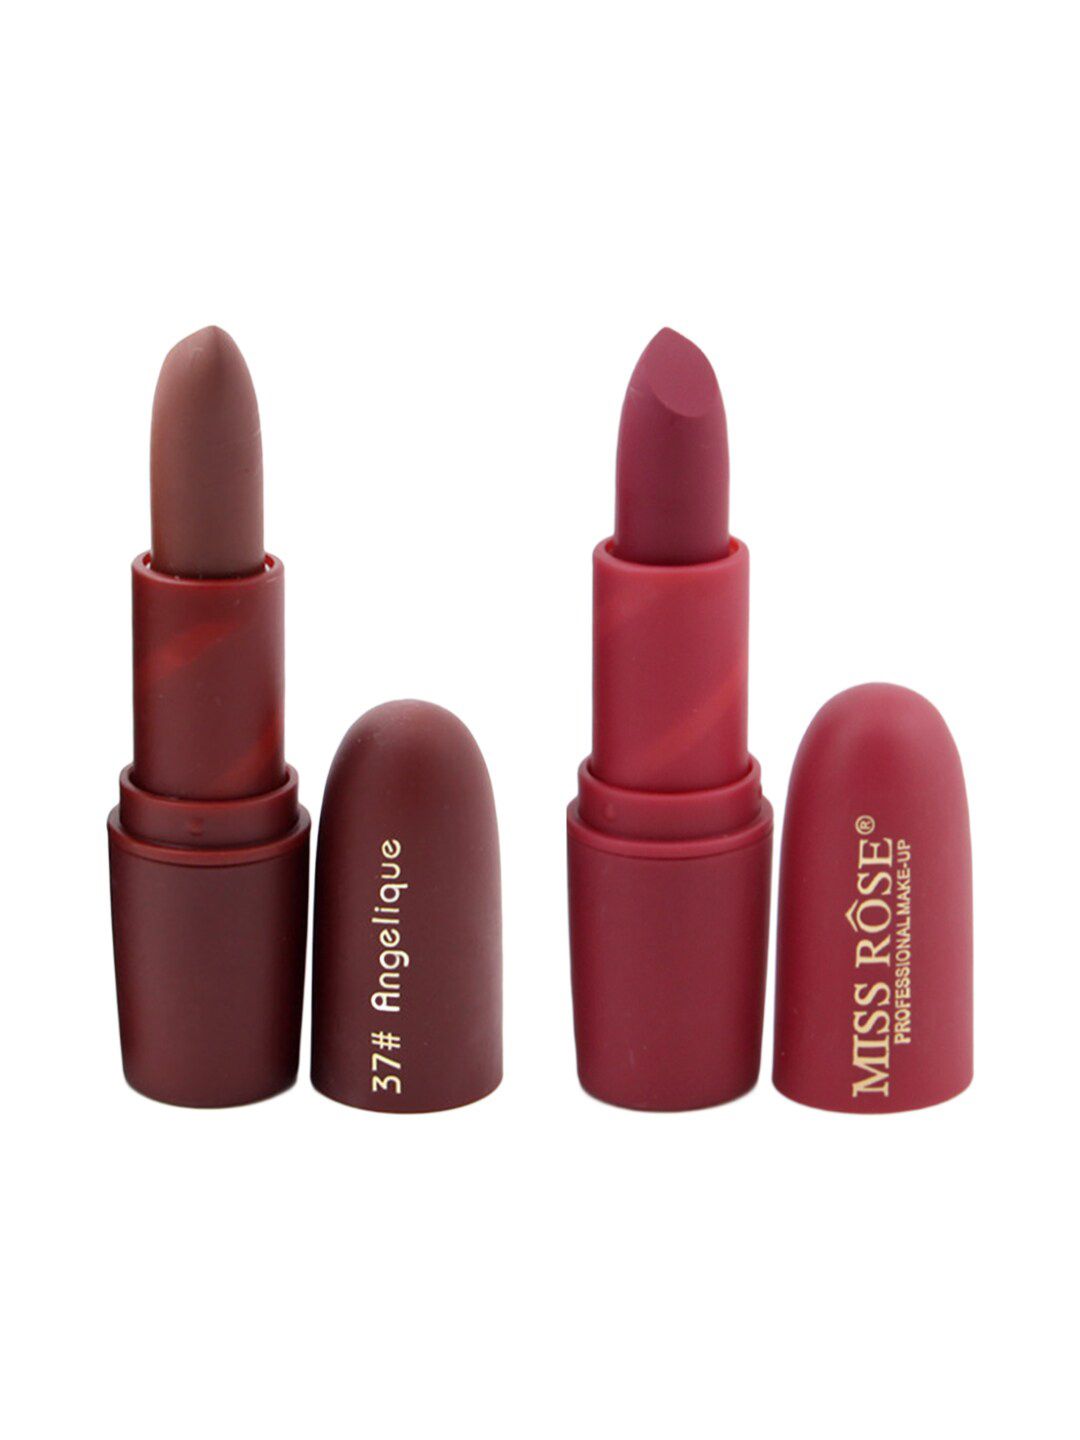 MISS ROSE Set of 2 Matte Creamy Lipsticks - Angelique 37 & Chii 49 Price in India